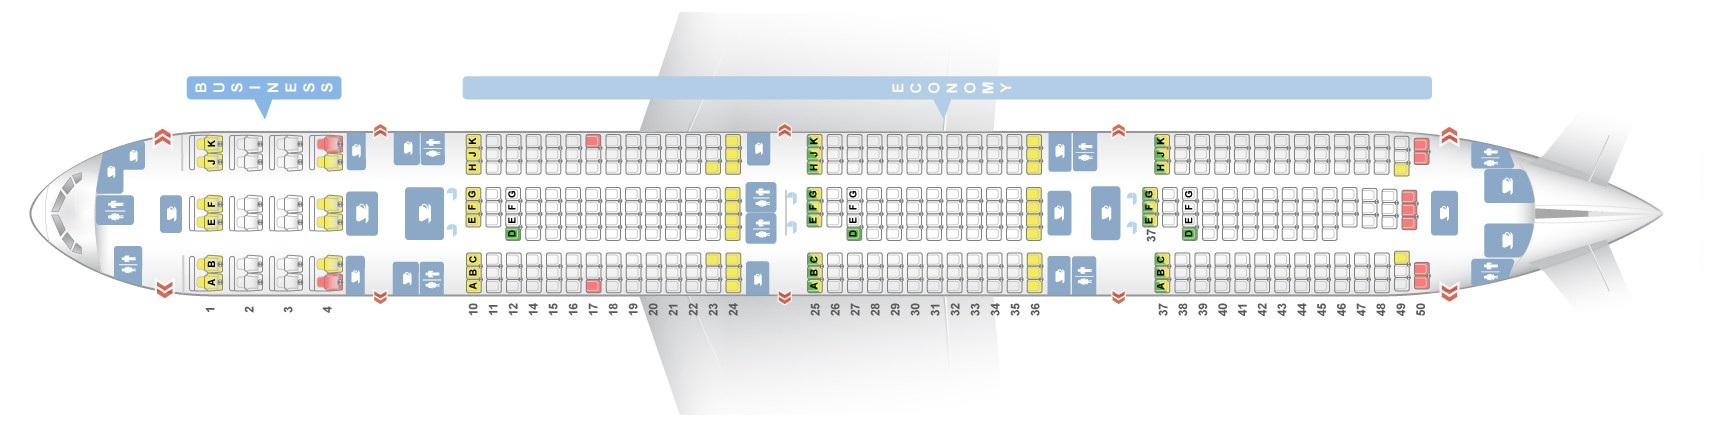 777 300er Seating Chart